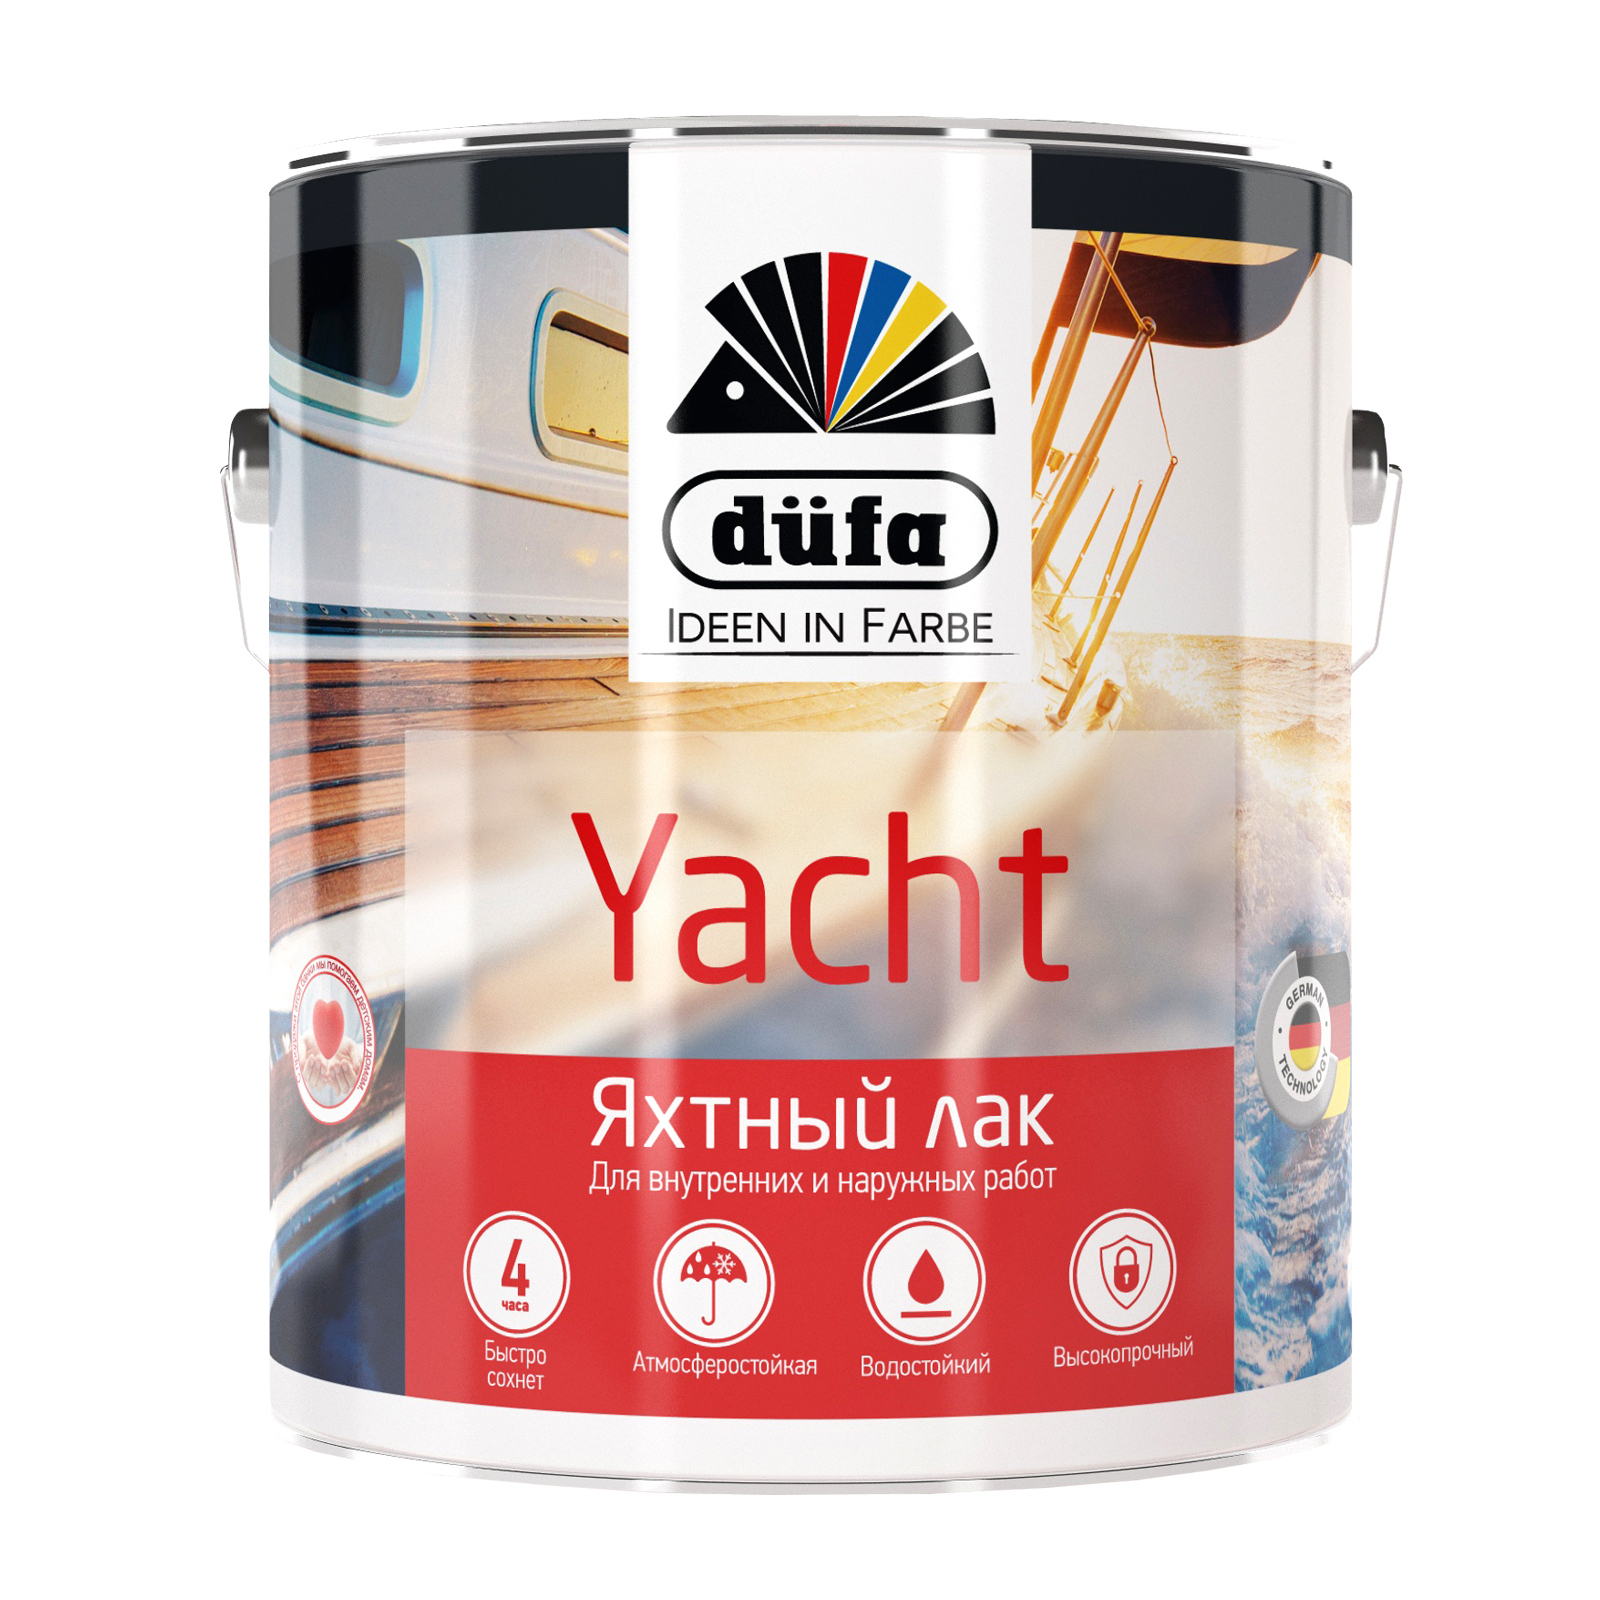 Dufa Yacht